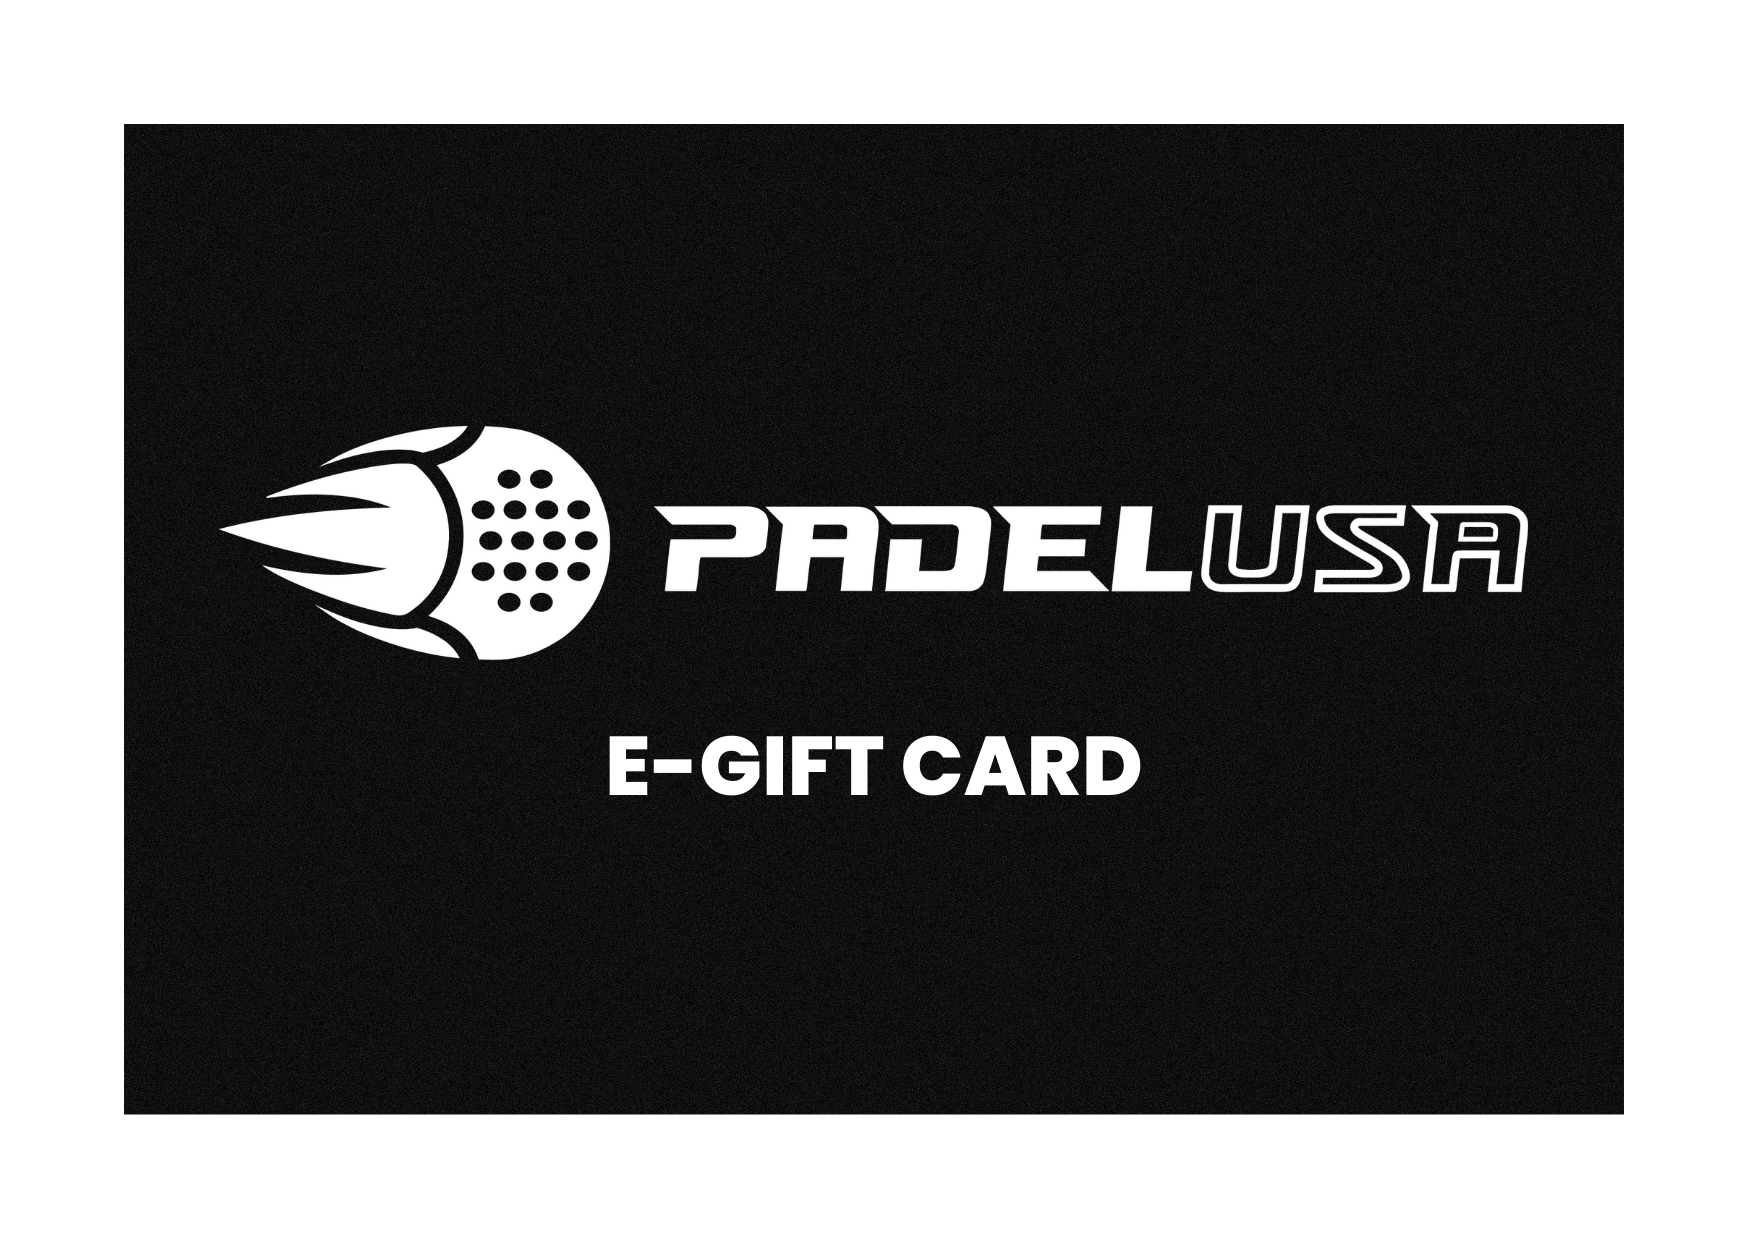 Padel USA E-Gift Card